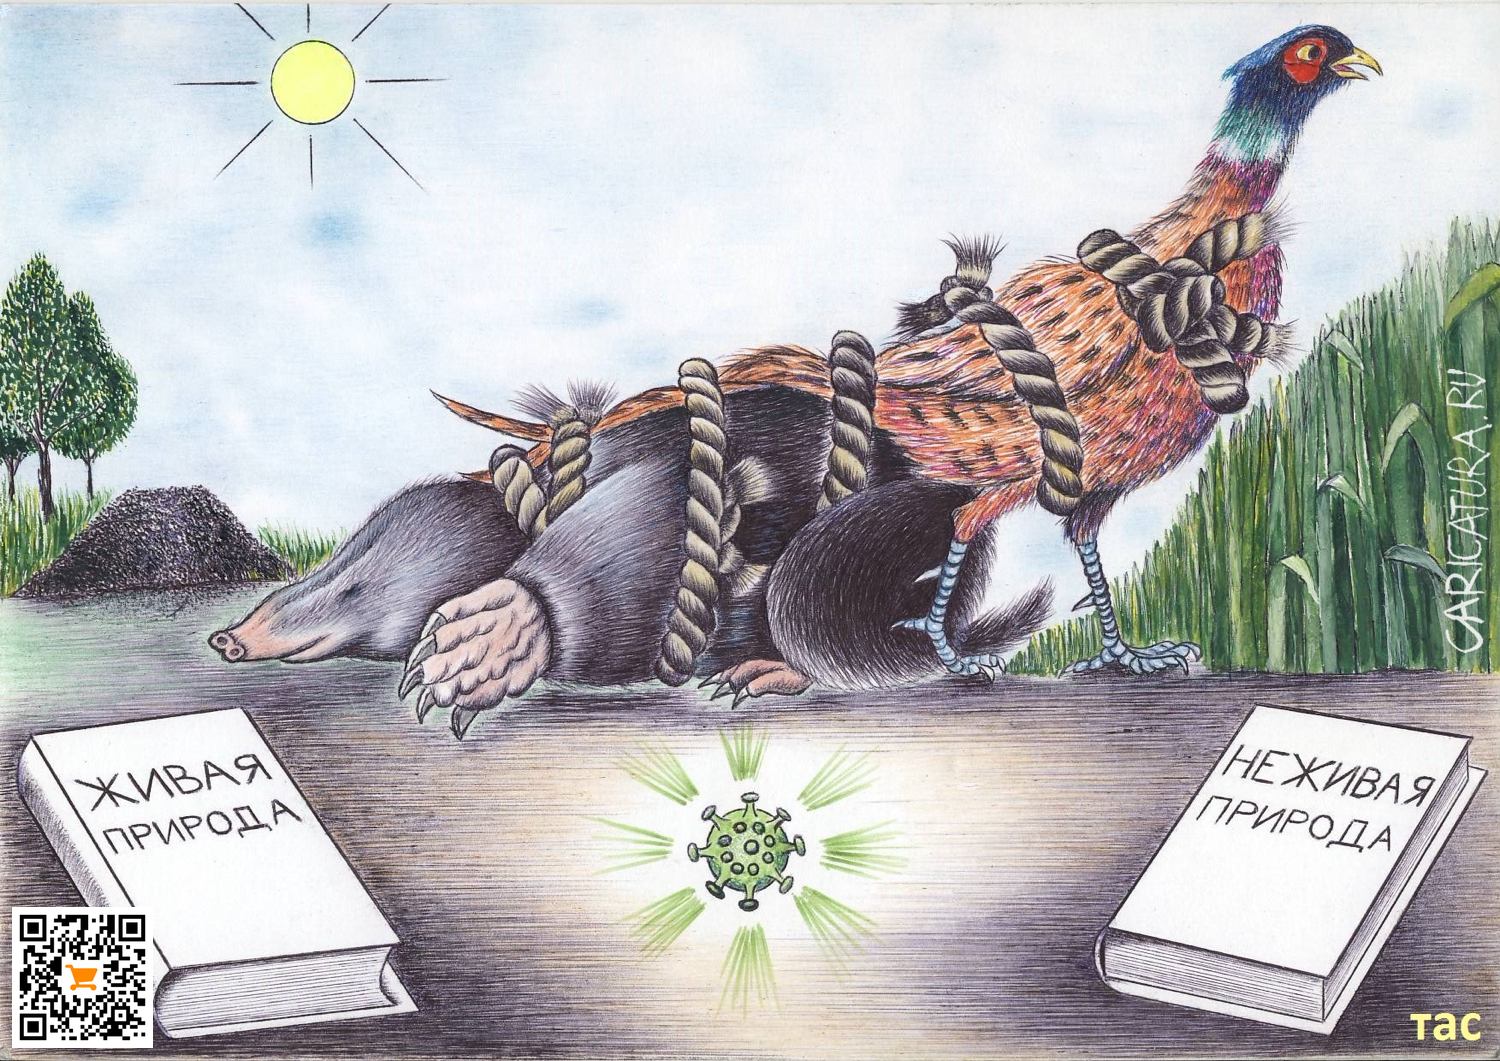 Карикатура "В природе все взаимосвязано", Александр Троицкий